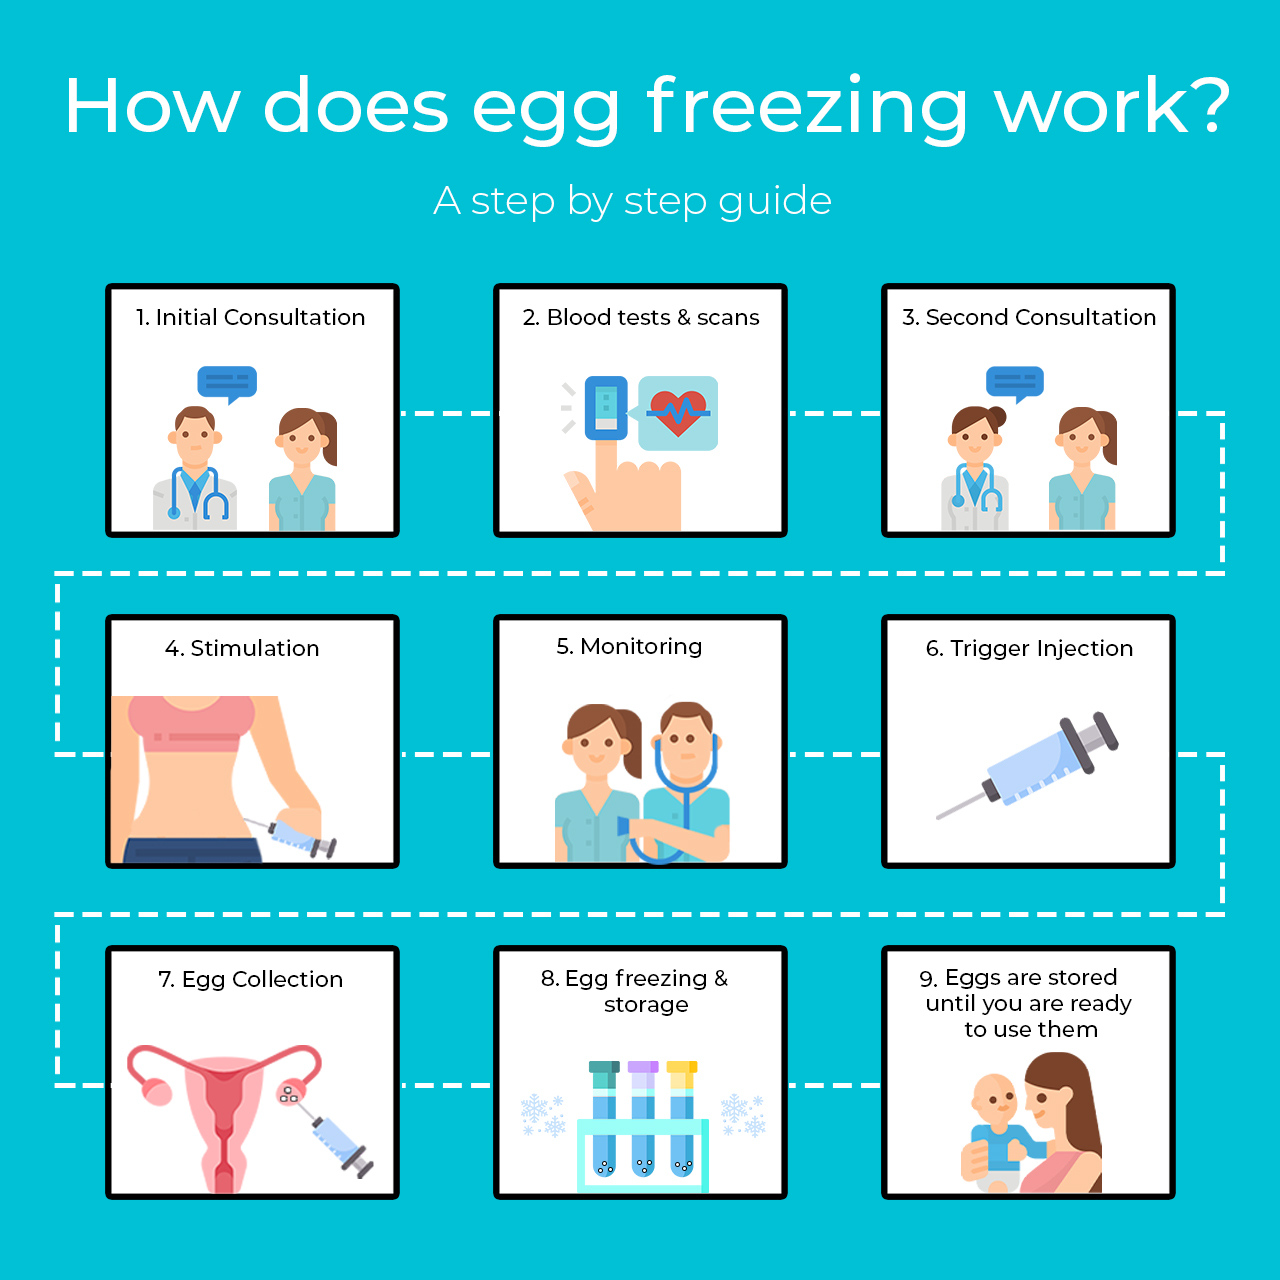 How does egg freezing work?